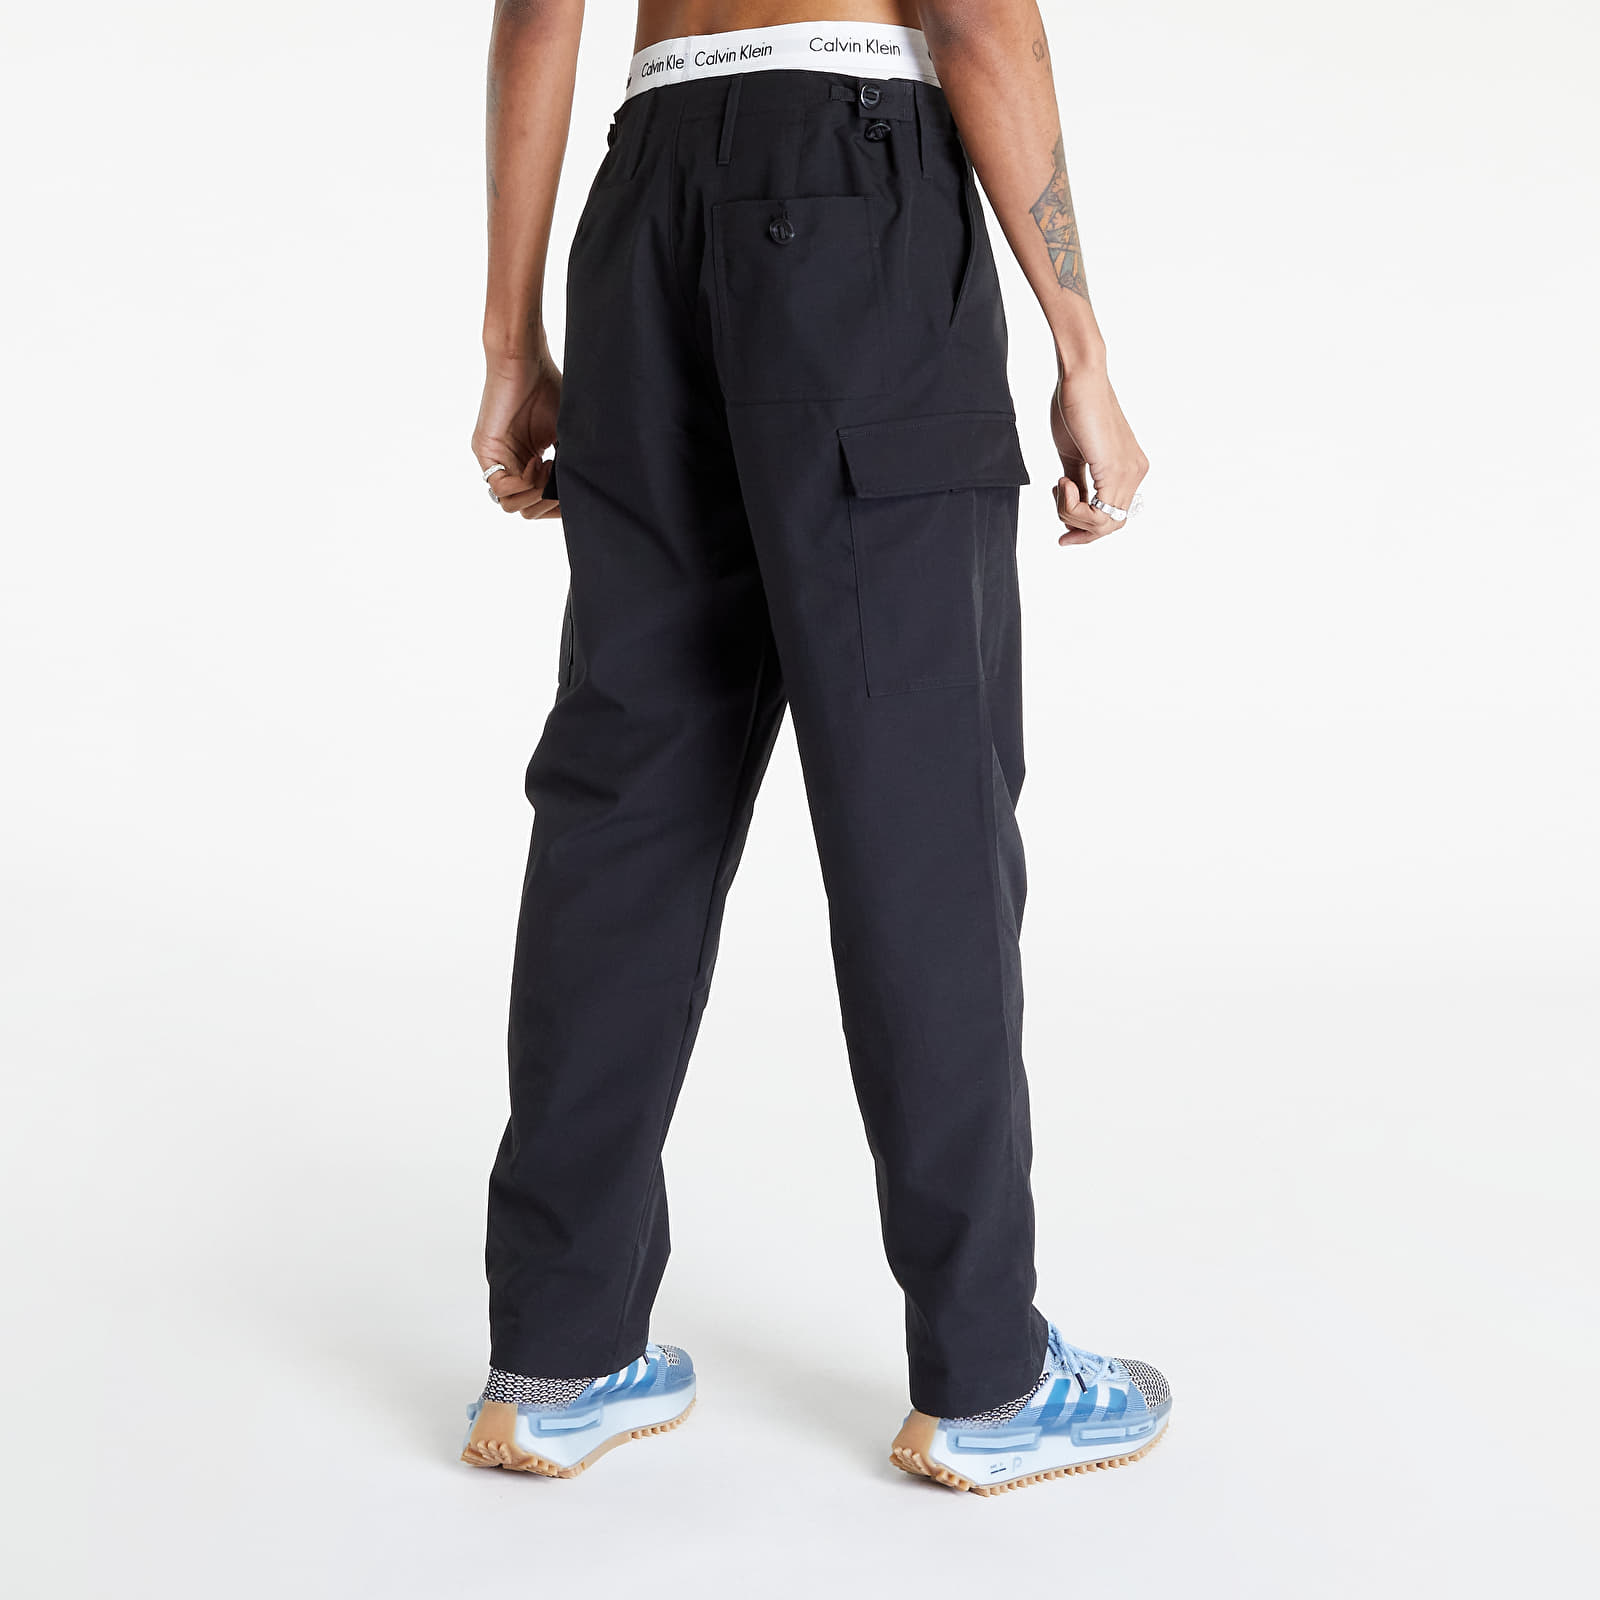 Spodnie adidas Blue Version Men's Cargo Pants Black